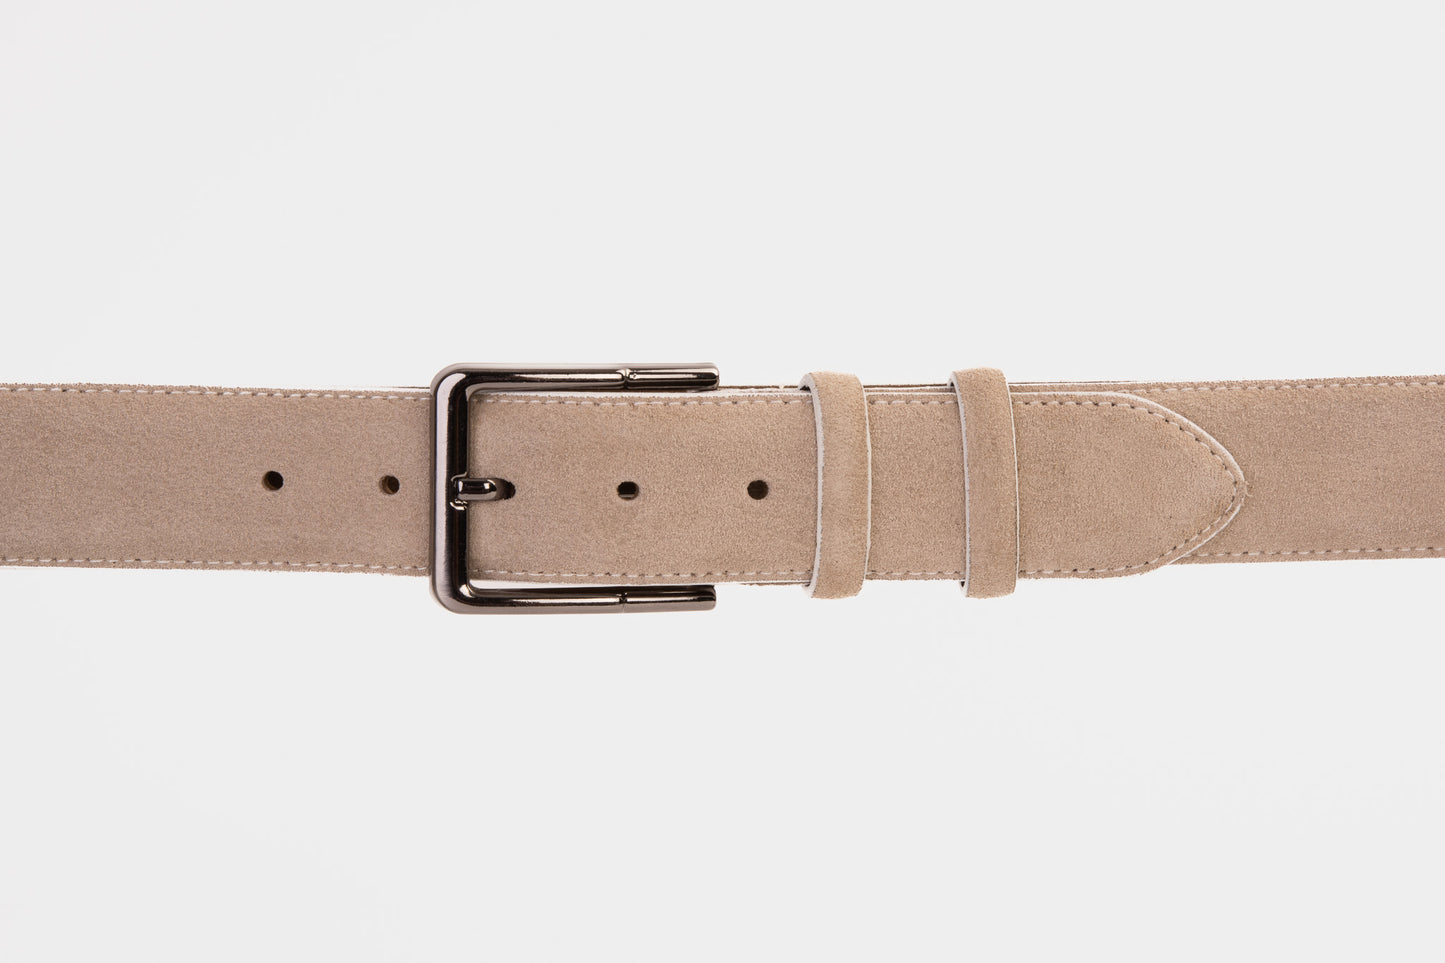 The Bari Beige Leather Belt